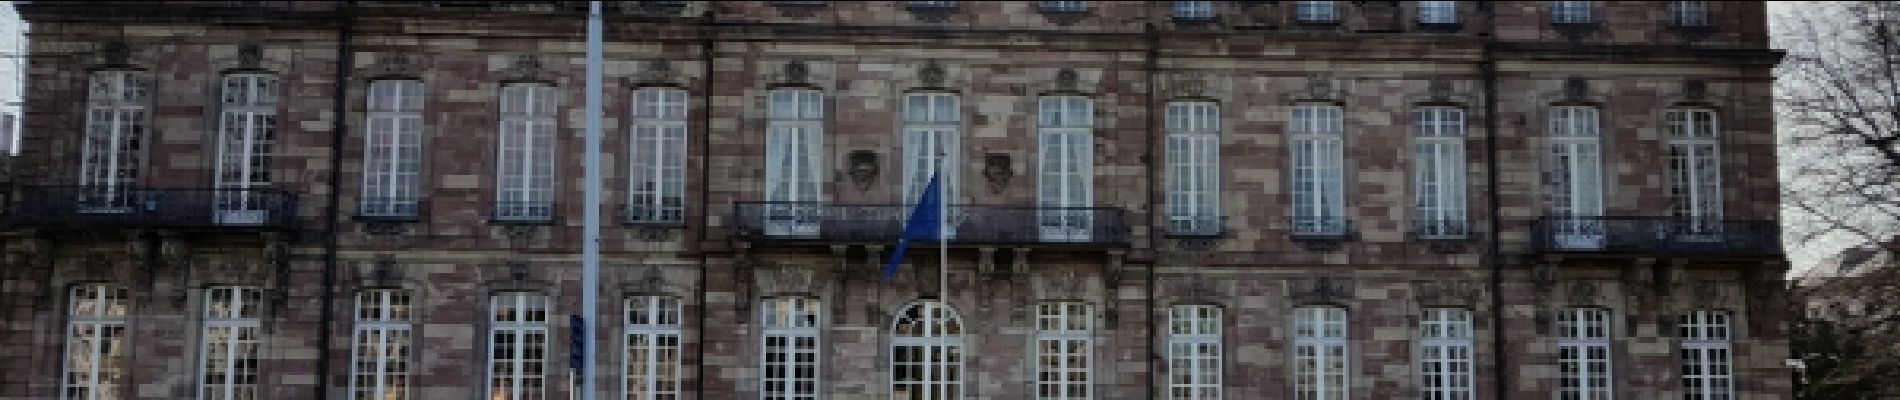 Point d'intérêt Strasbourg - Point 36 - Photo